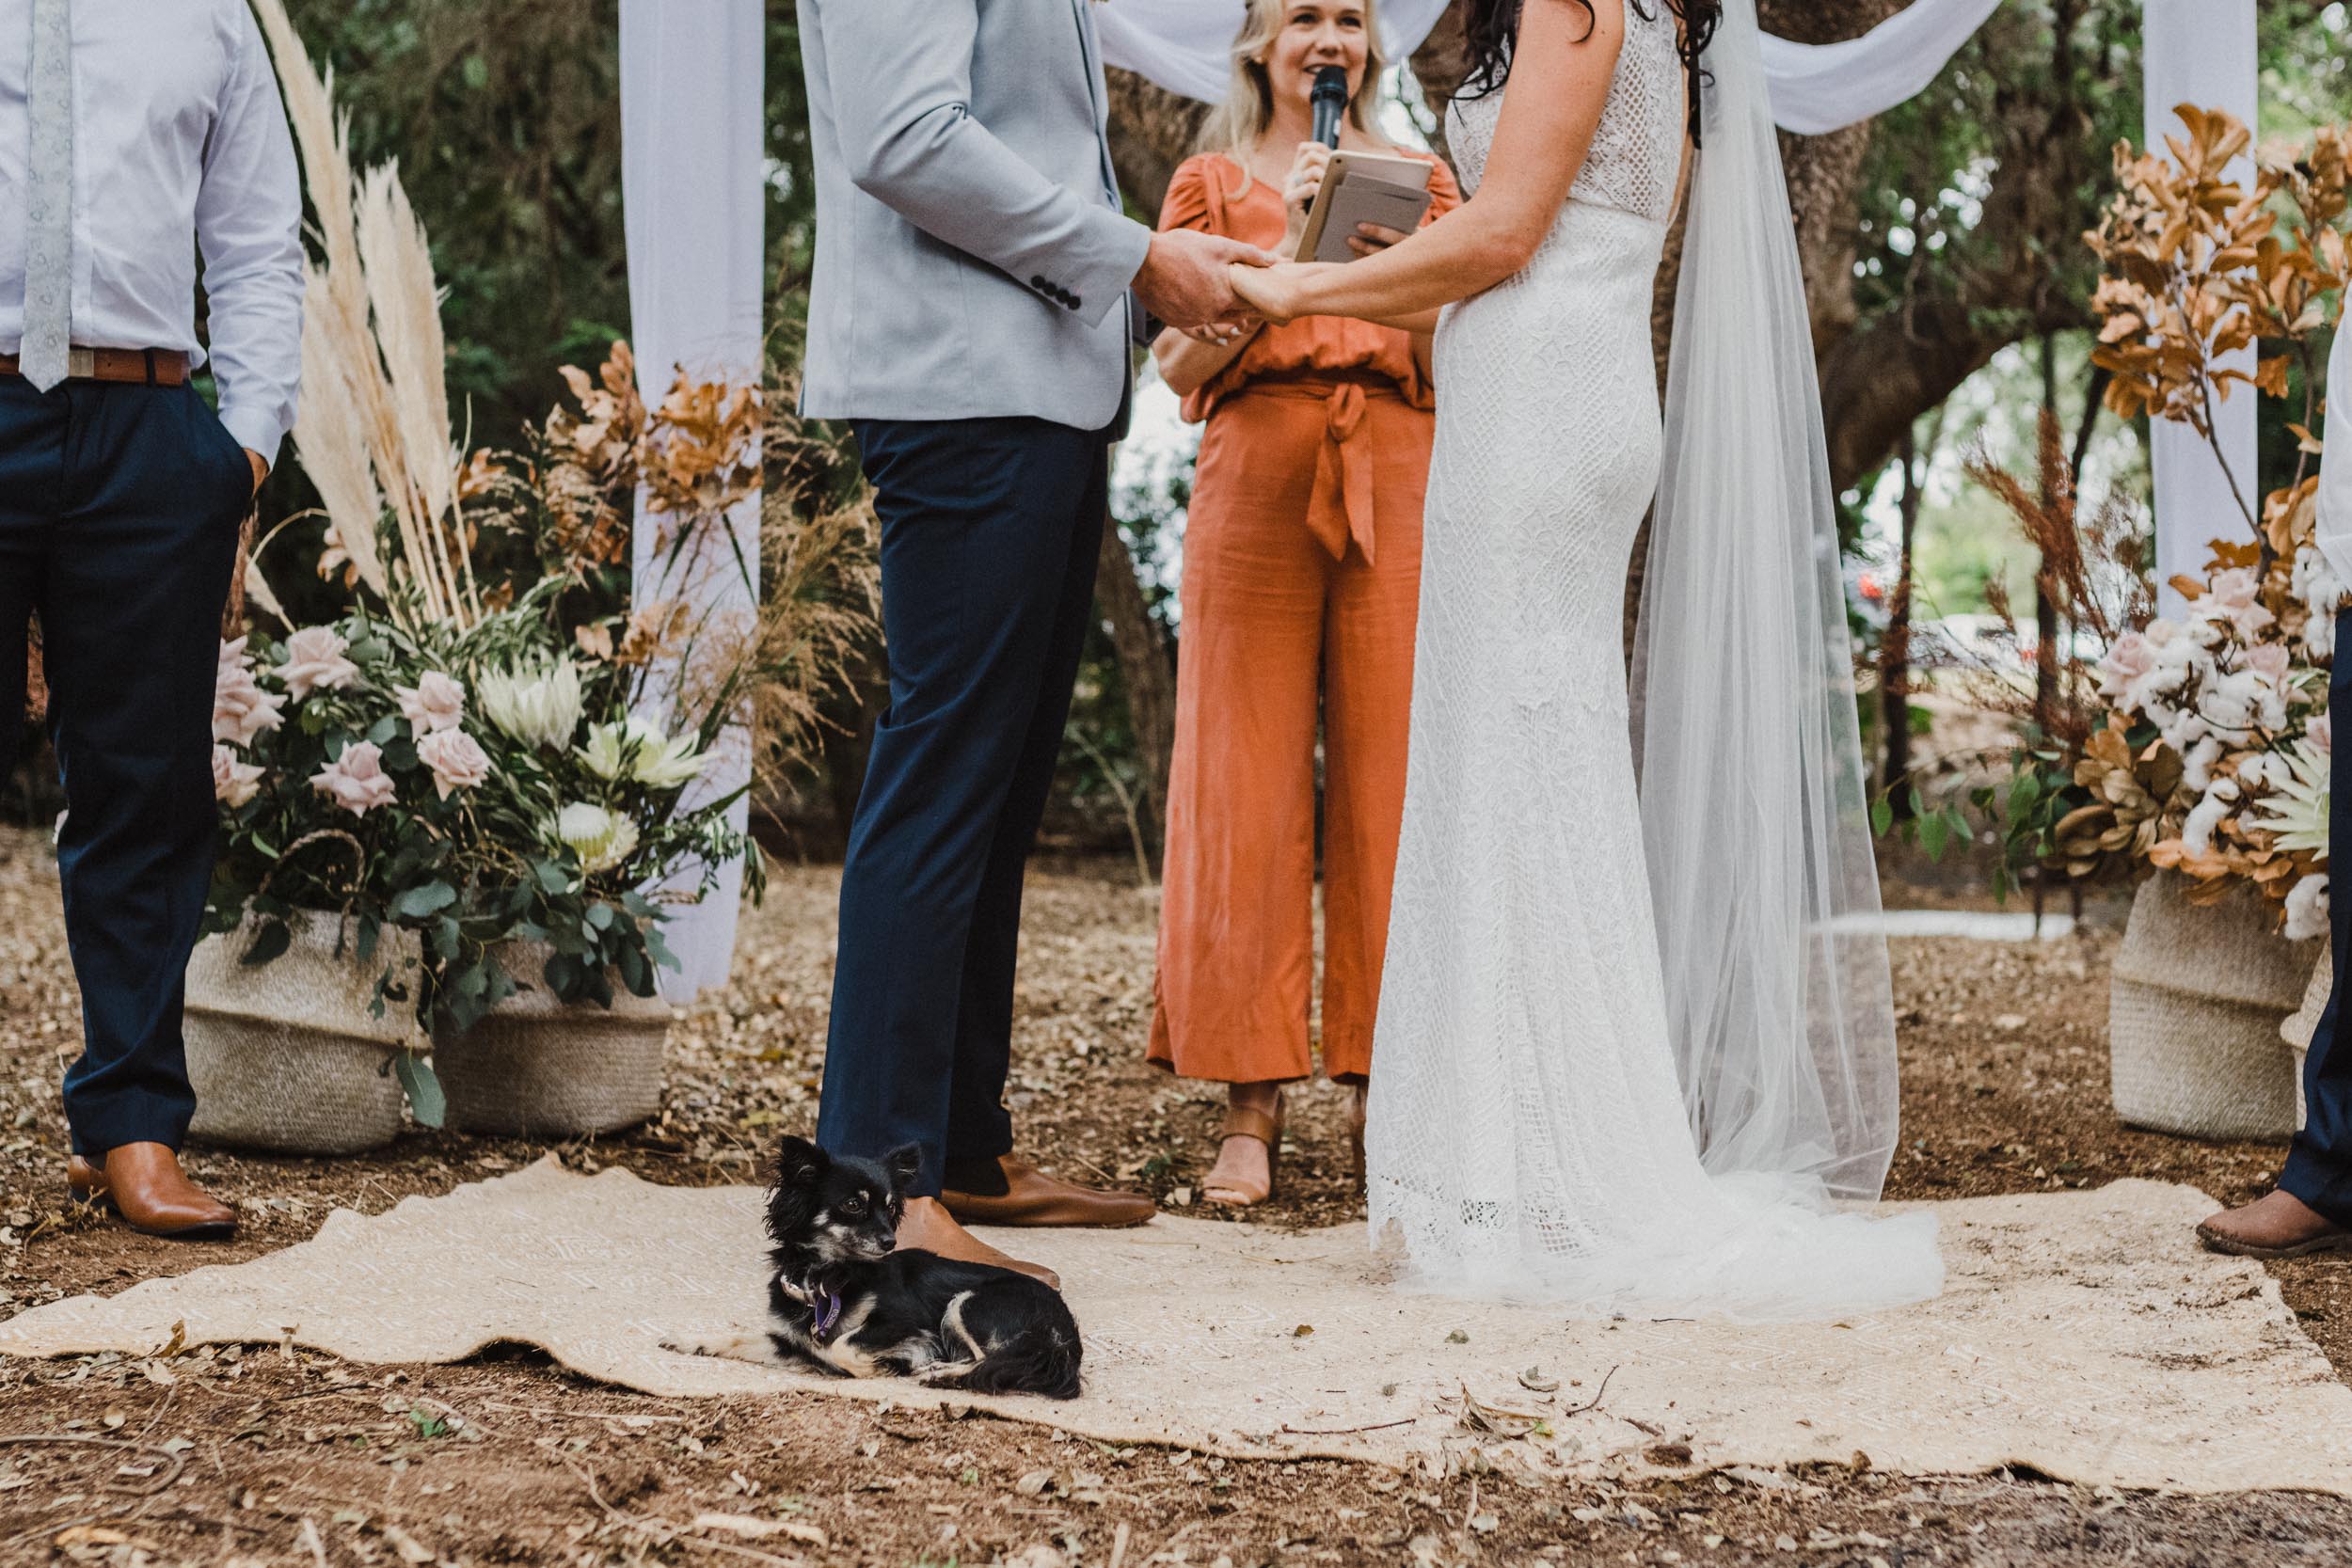 The Raw Photographer - Cairns Wedding Photography - Mareeba Queensland - Australian Outback wedding - Dress Made With Love Bridal - Ceremony Reception Venue Inspiration-27.jpg